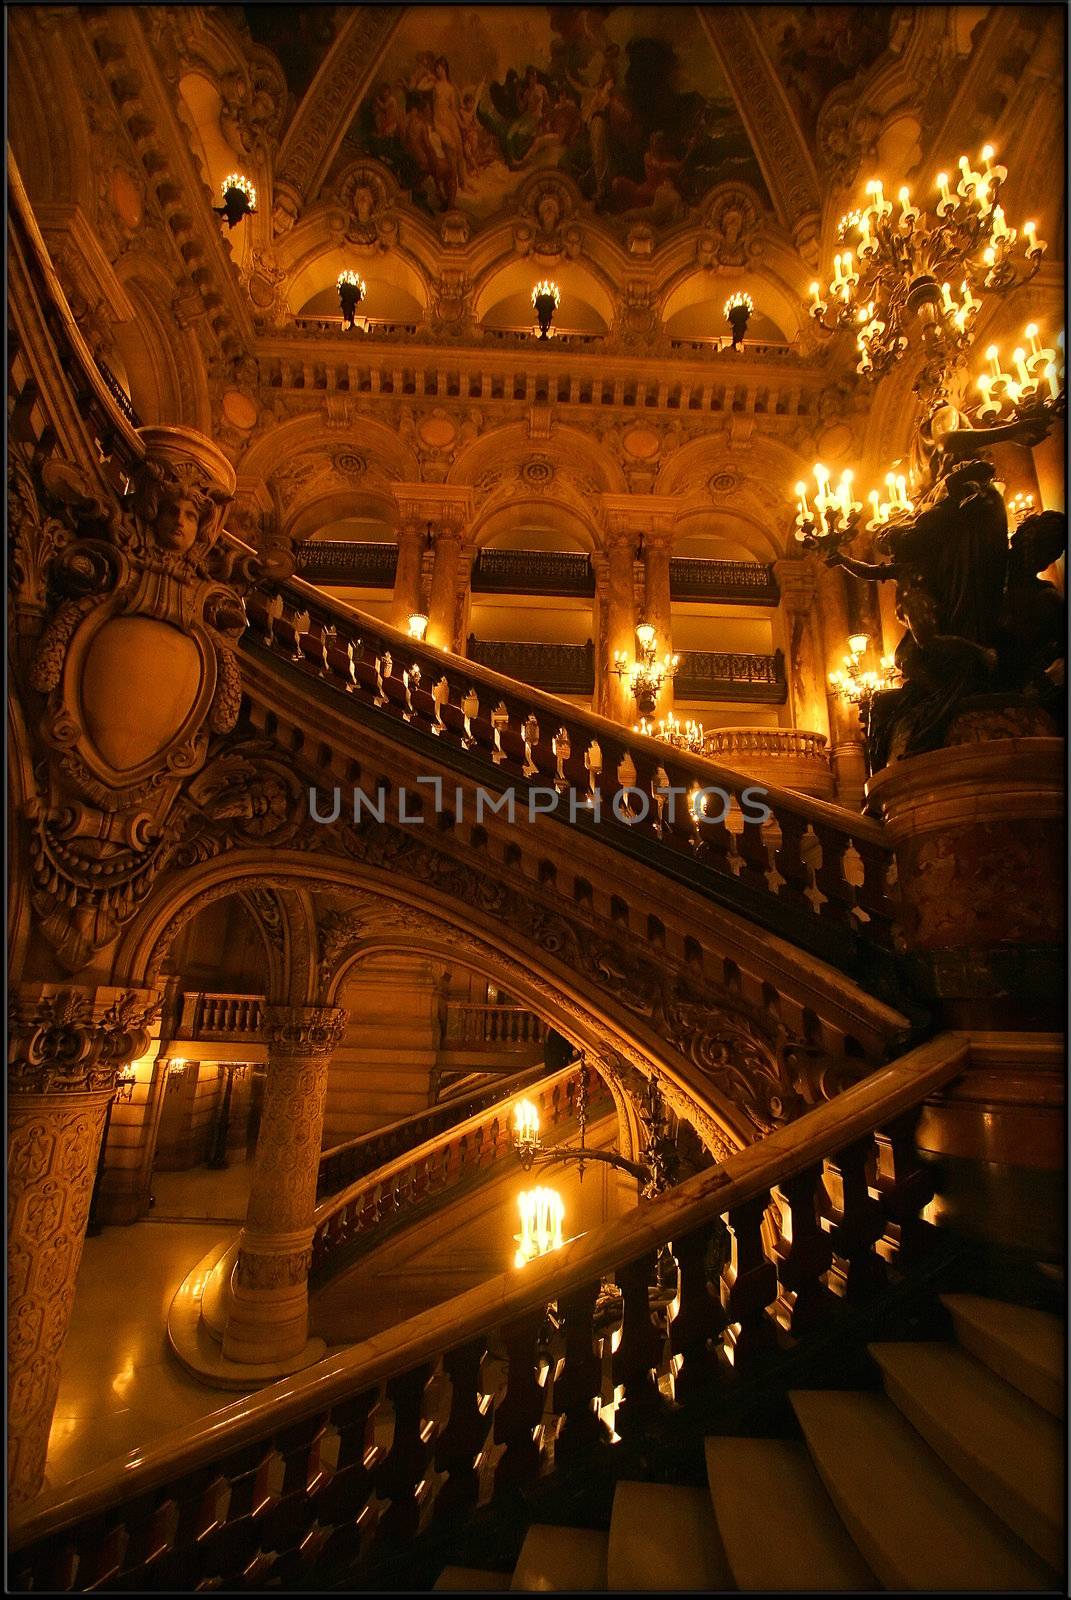 Impressive Opera House In Paris by Imagecom